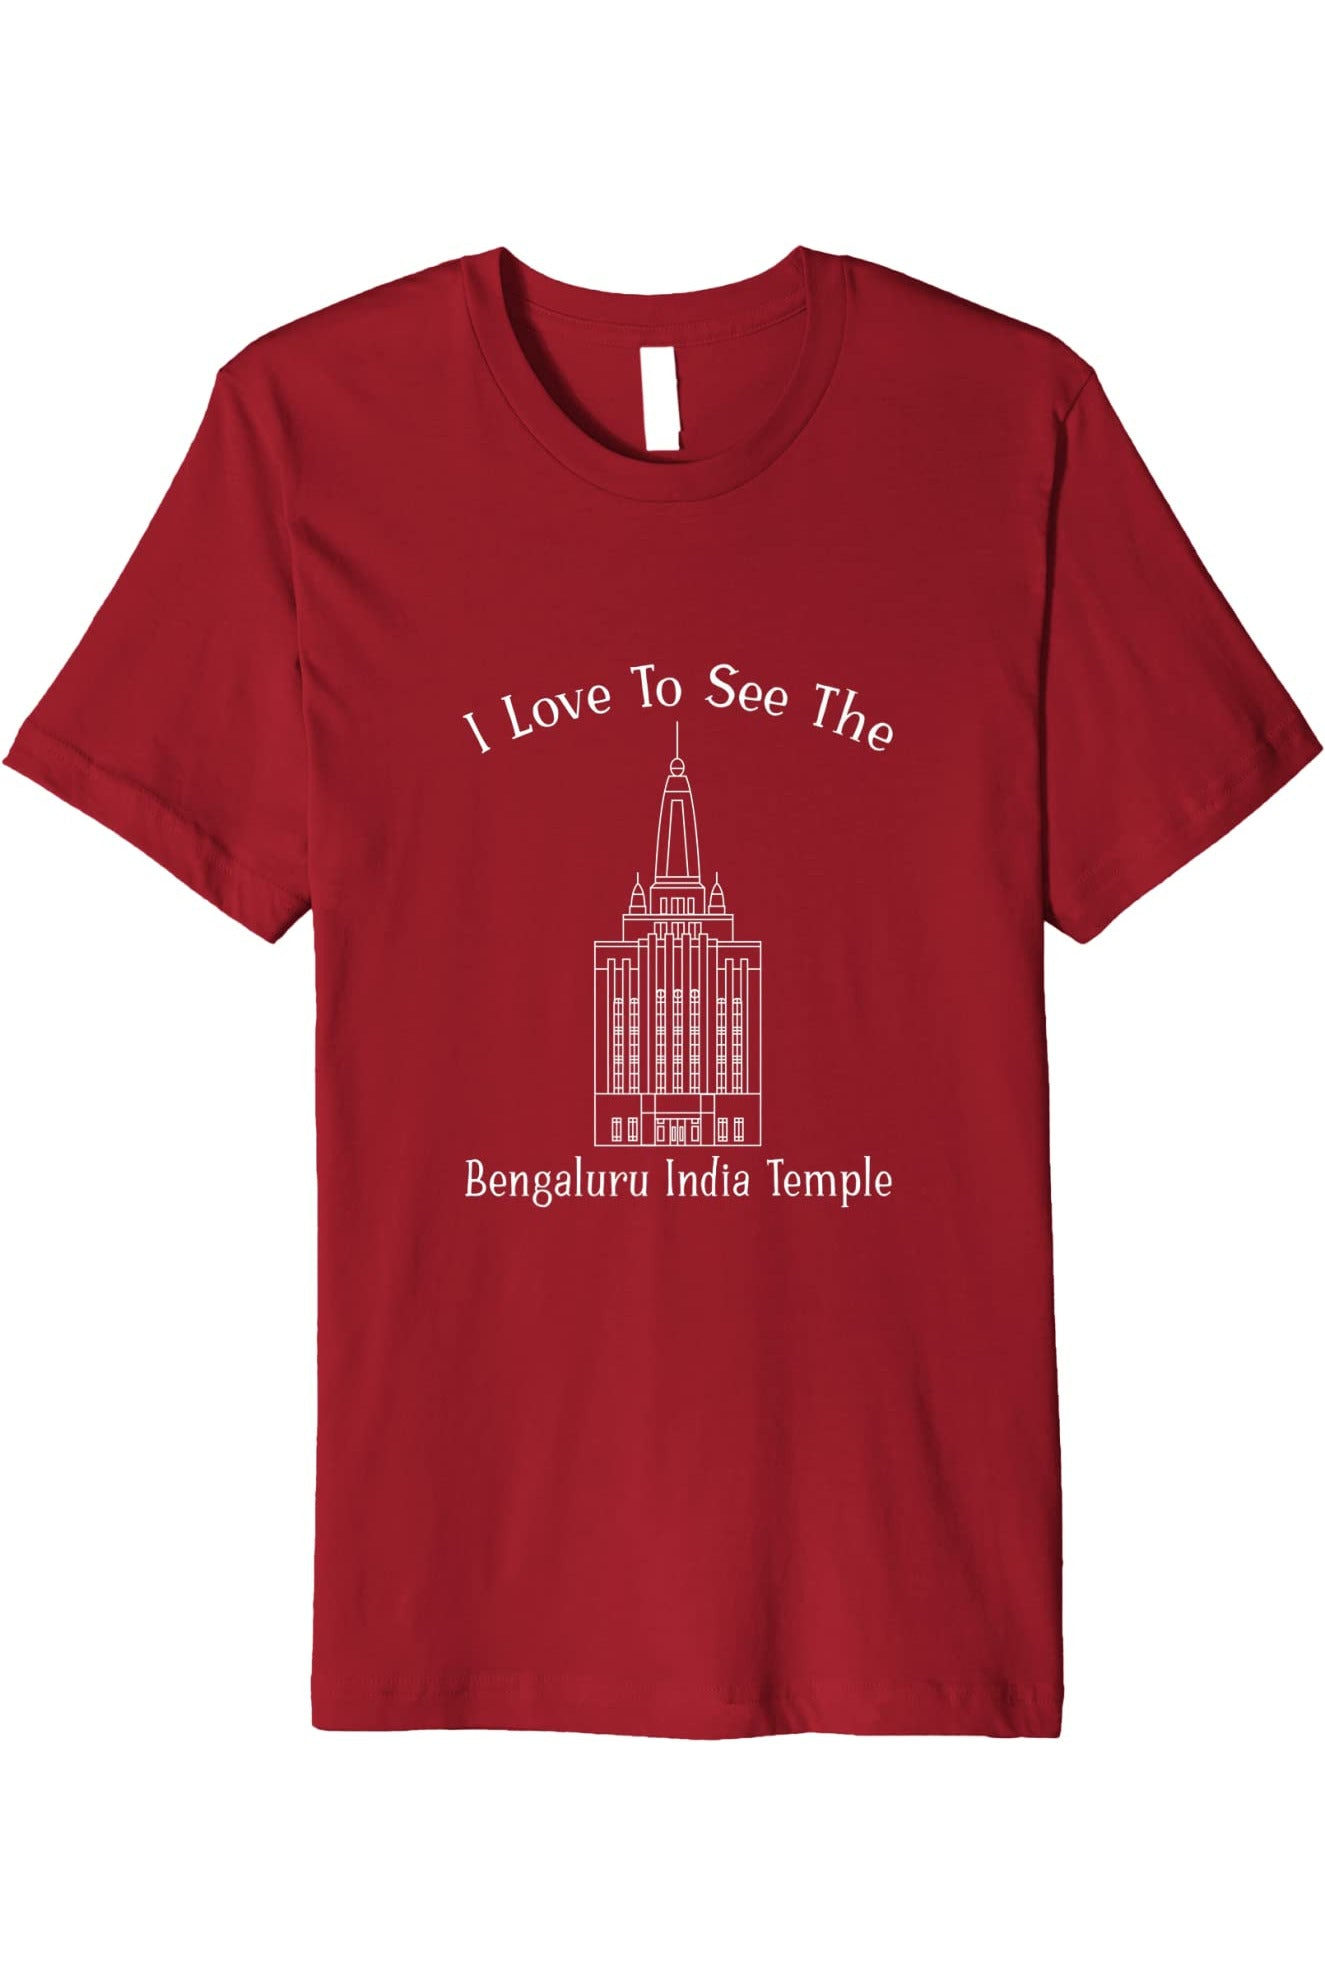 Bengaluru India Temple T-Shirt - Premium - Happy Style (English) US